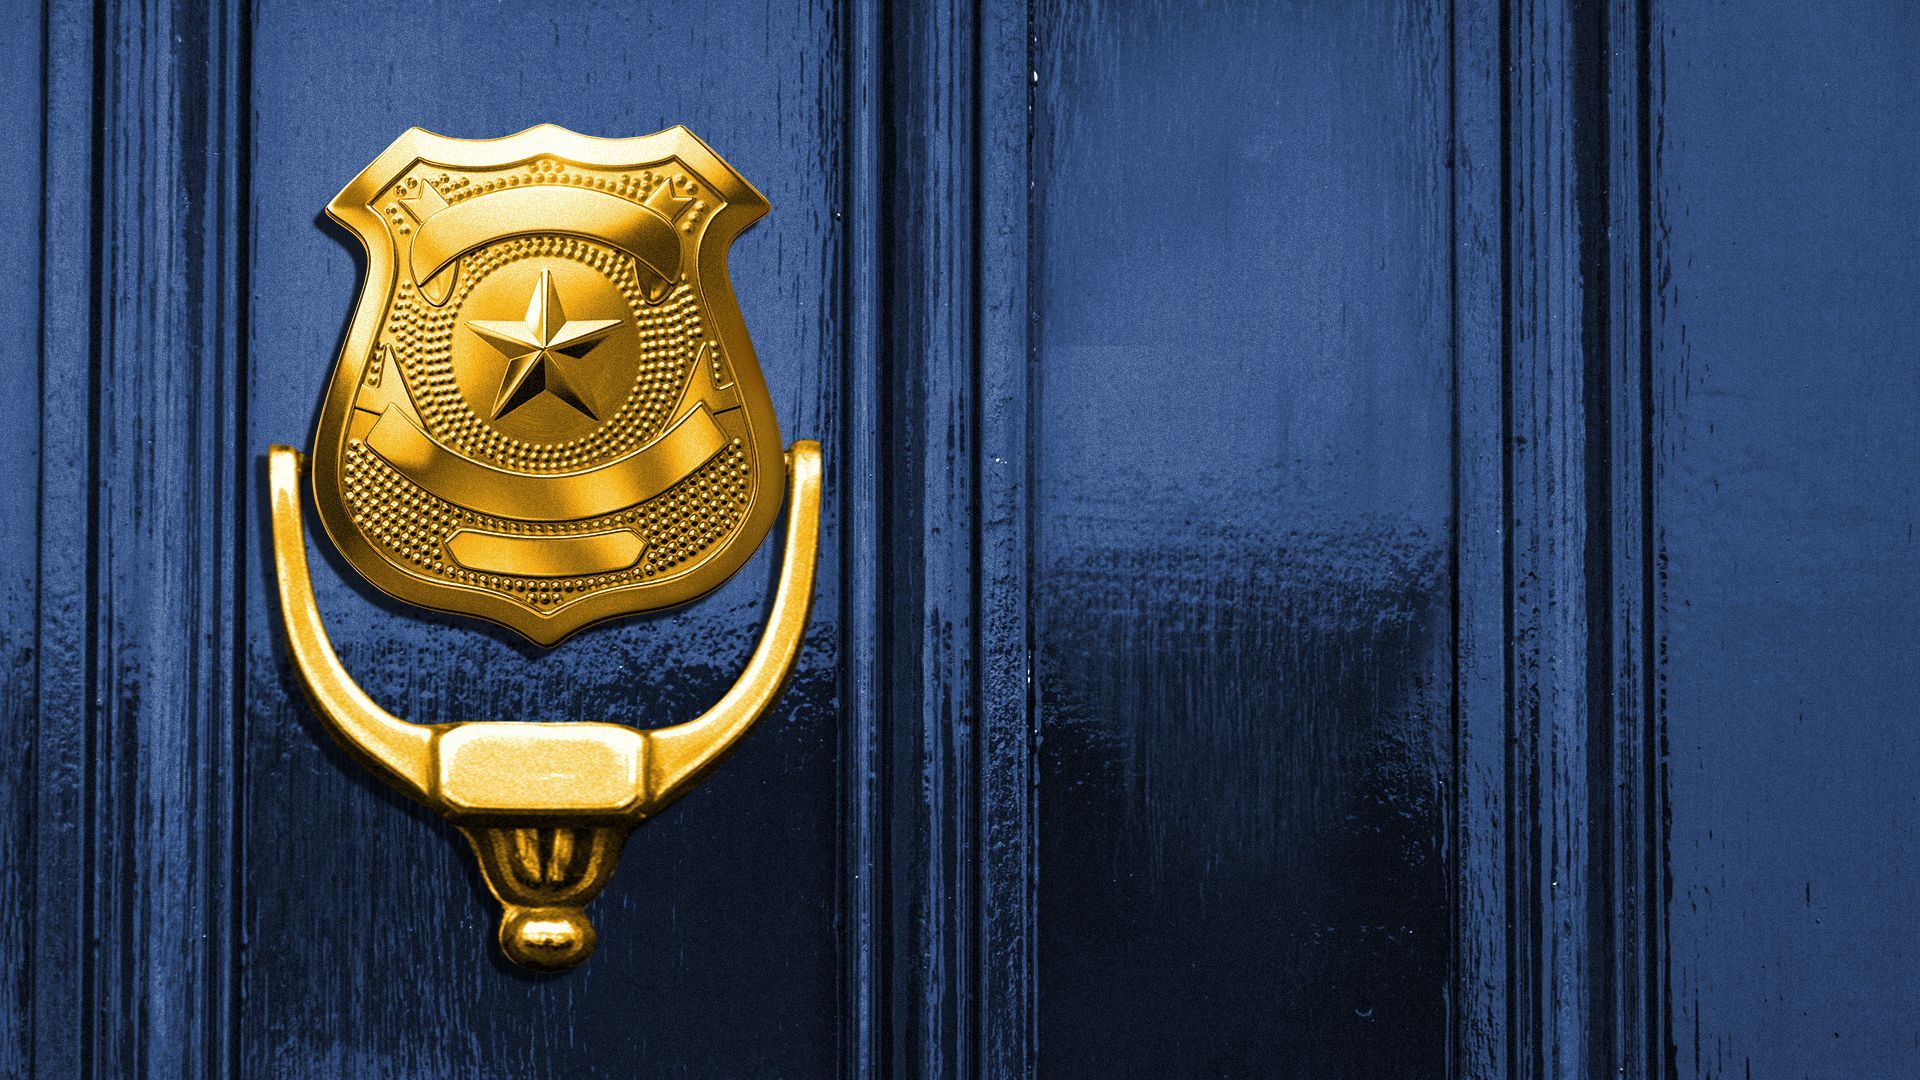 Illustration of a police badge door knocker on a door.